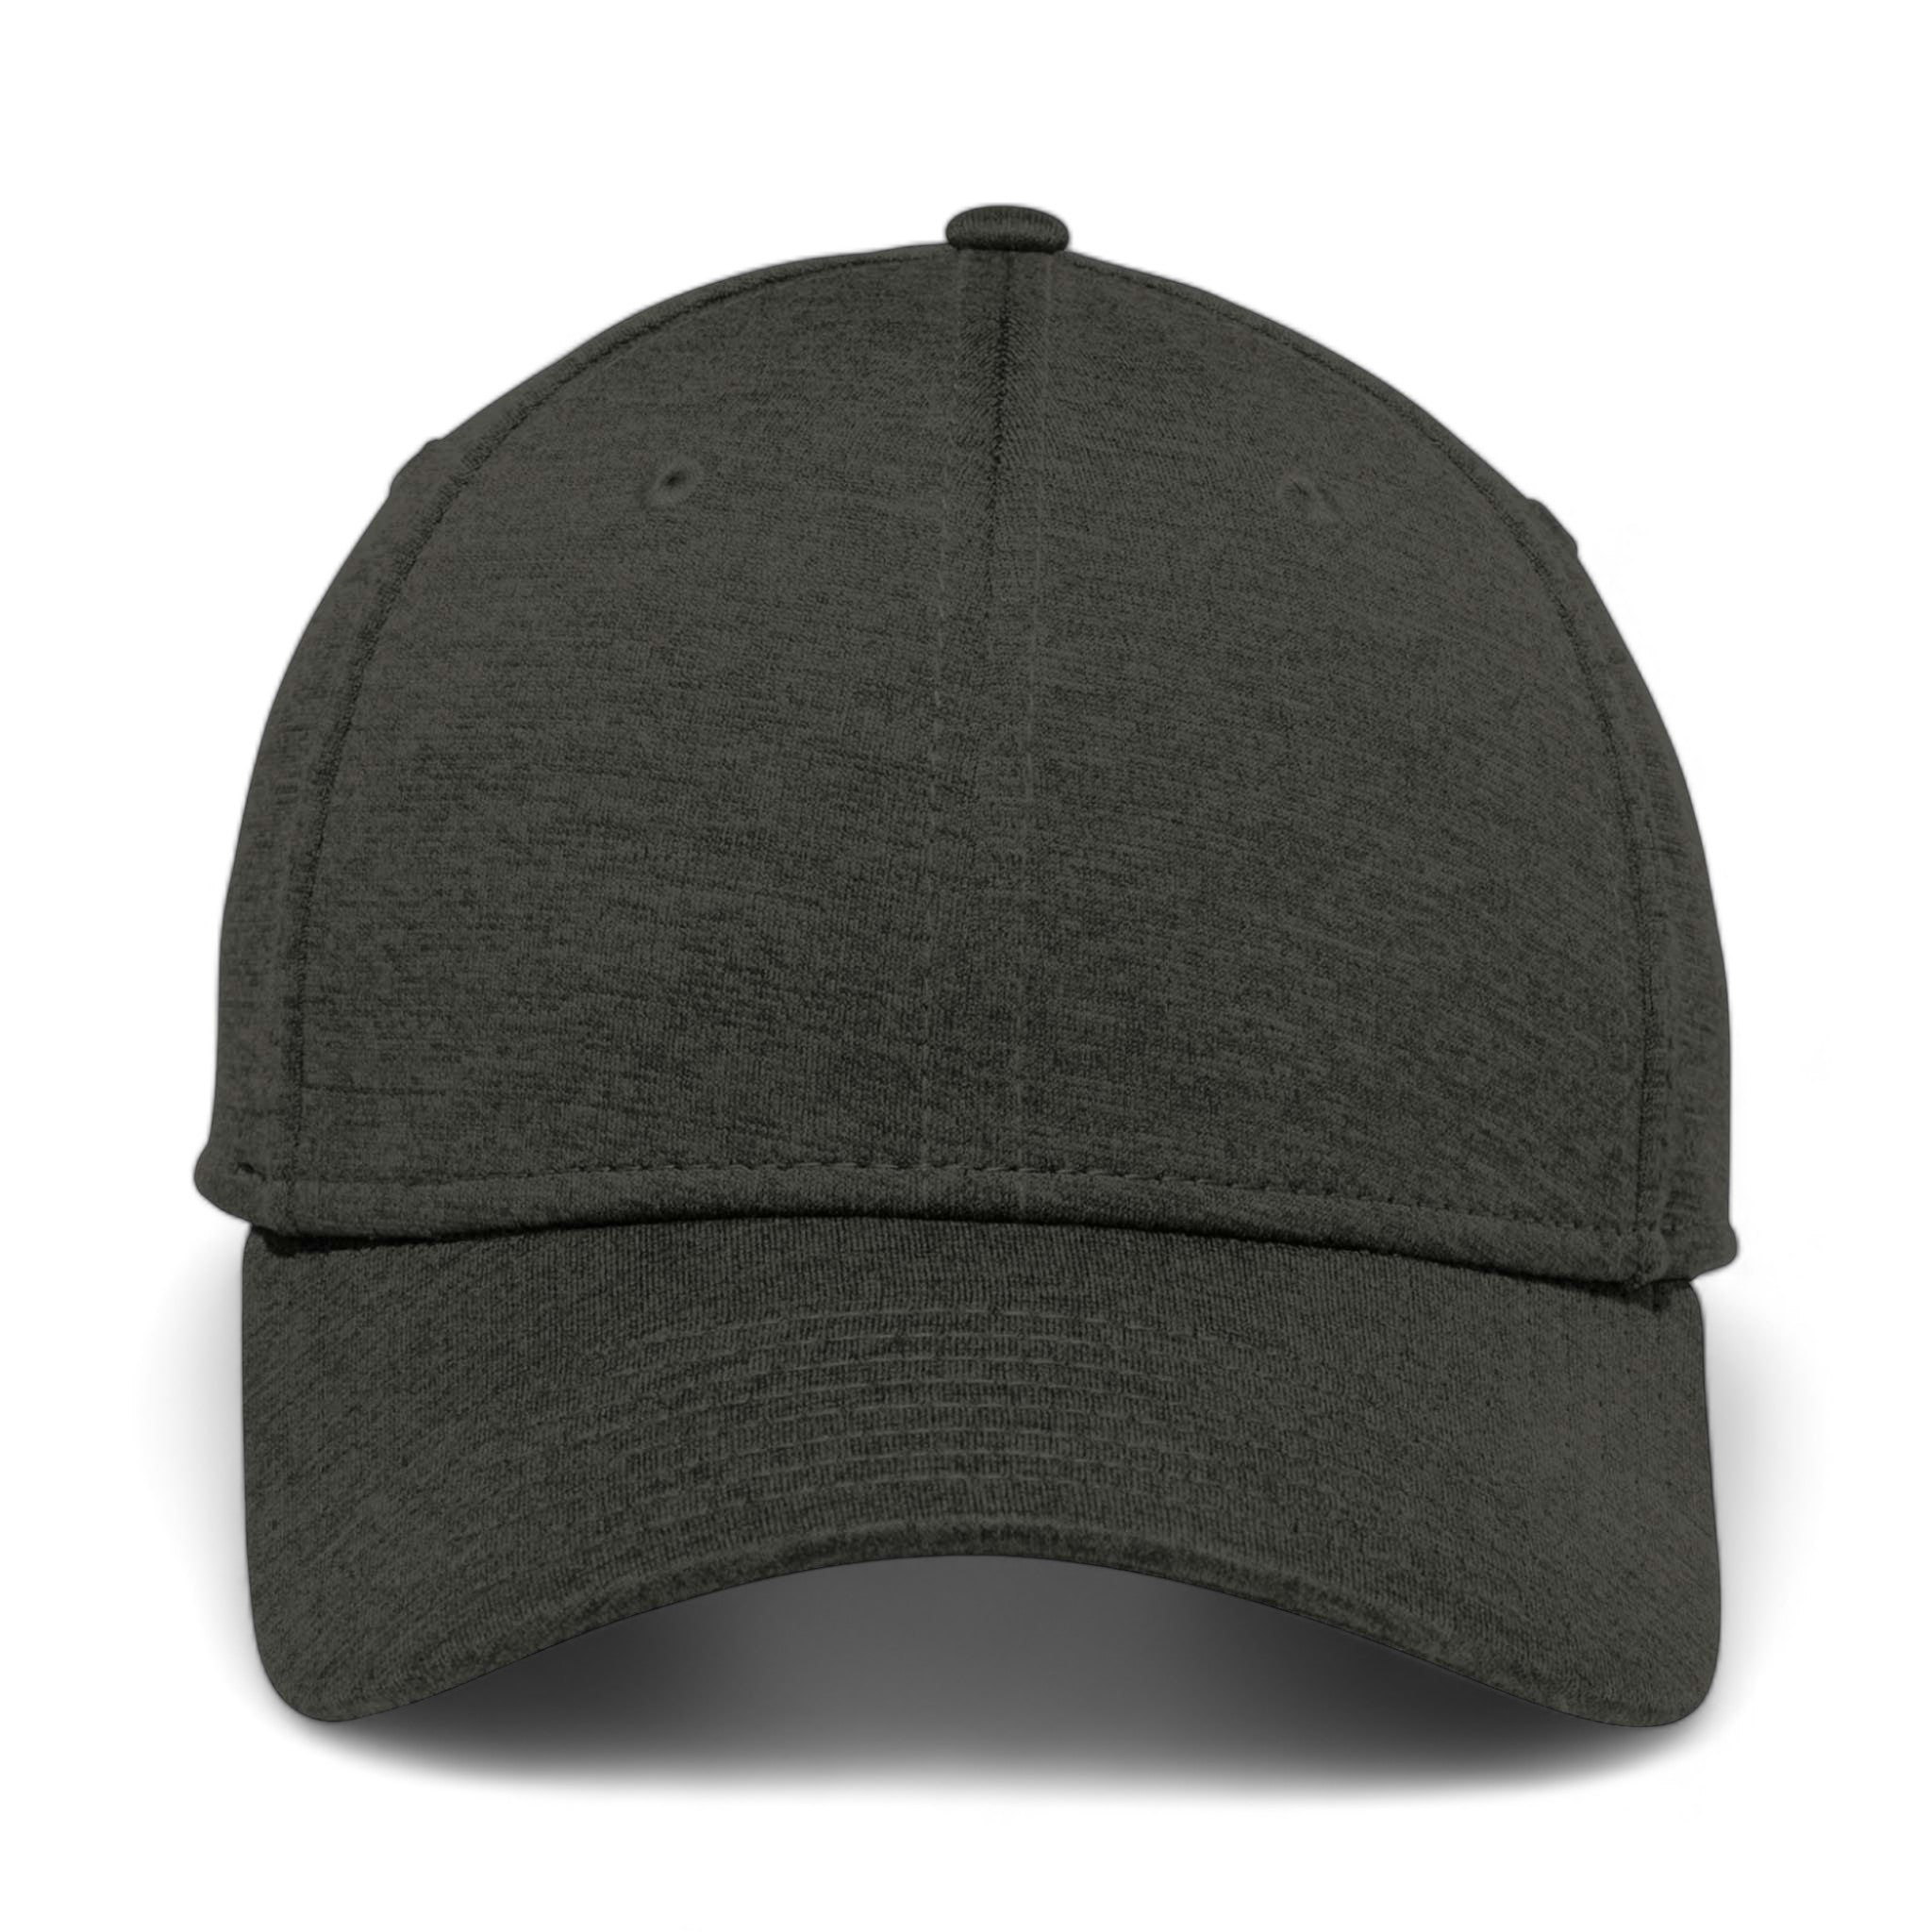 Front view of New Era NE703 custom hat in black shadow heather